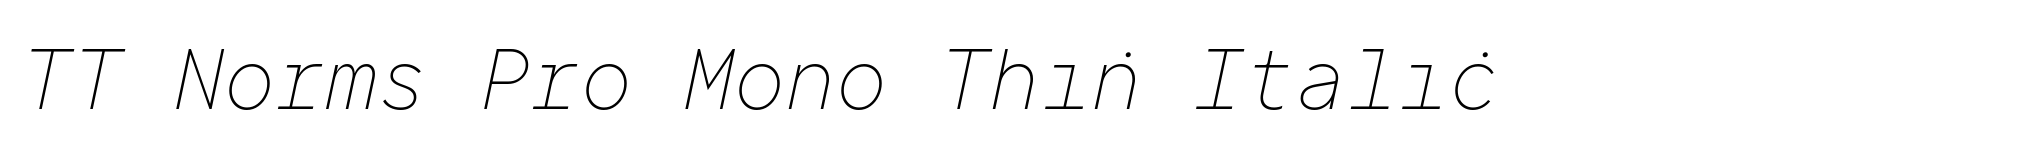 TT Norms Pro Mono Thin Italic image